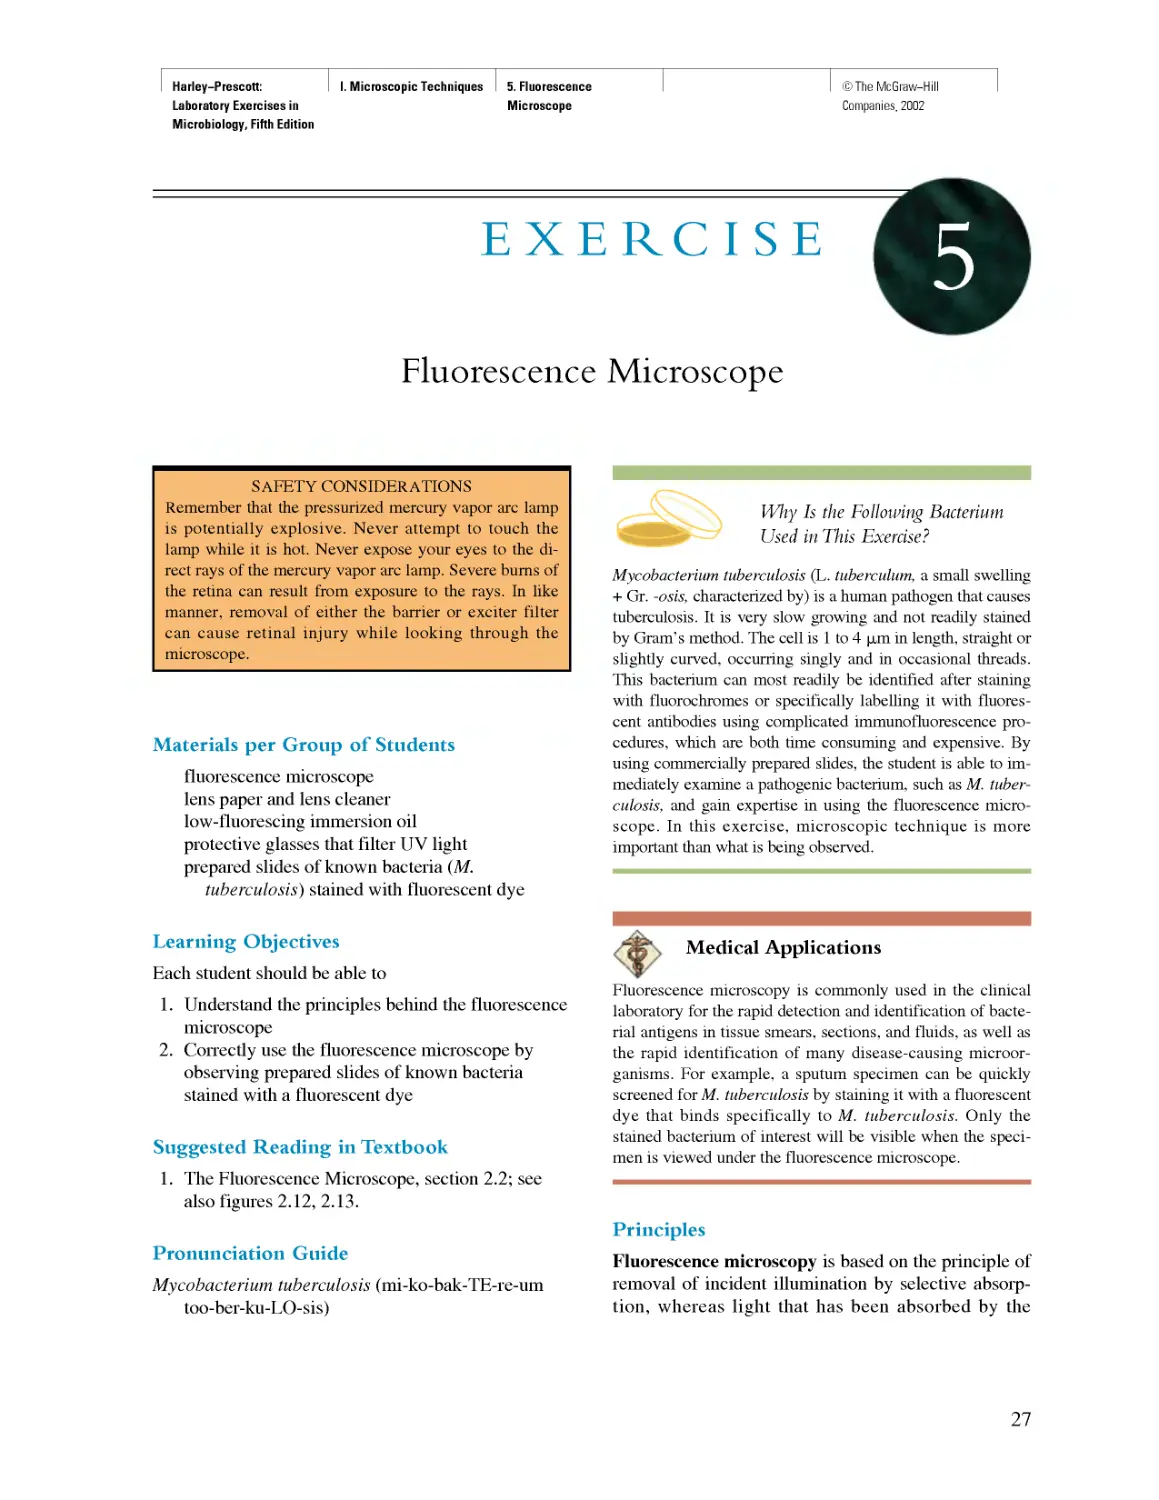 5. Fluorescence Microscope